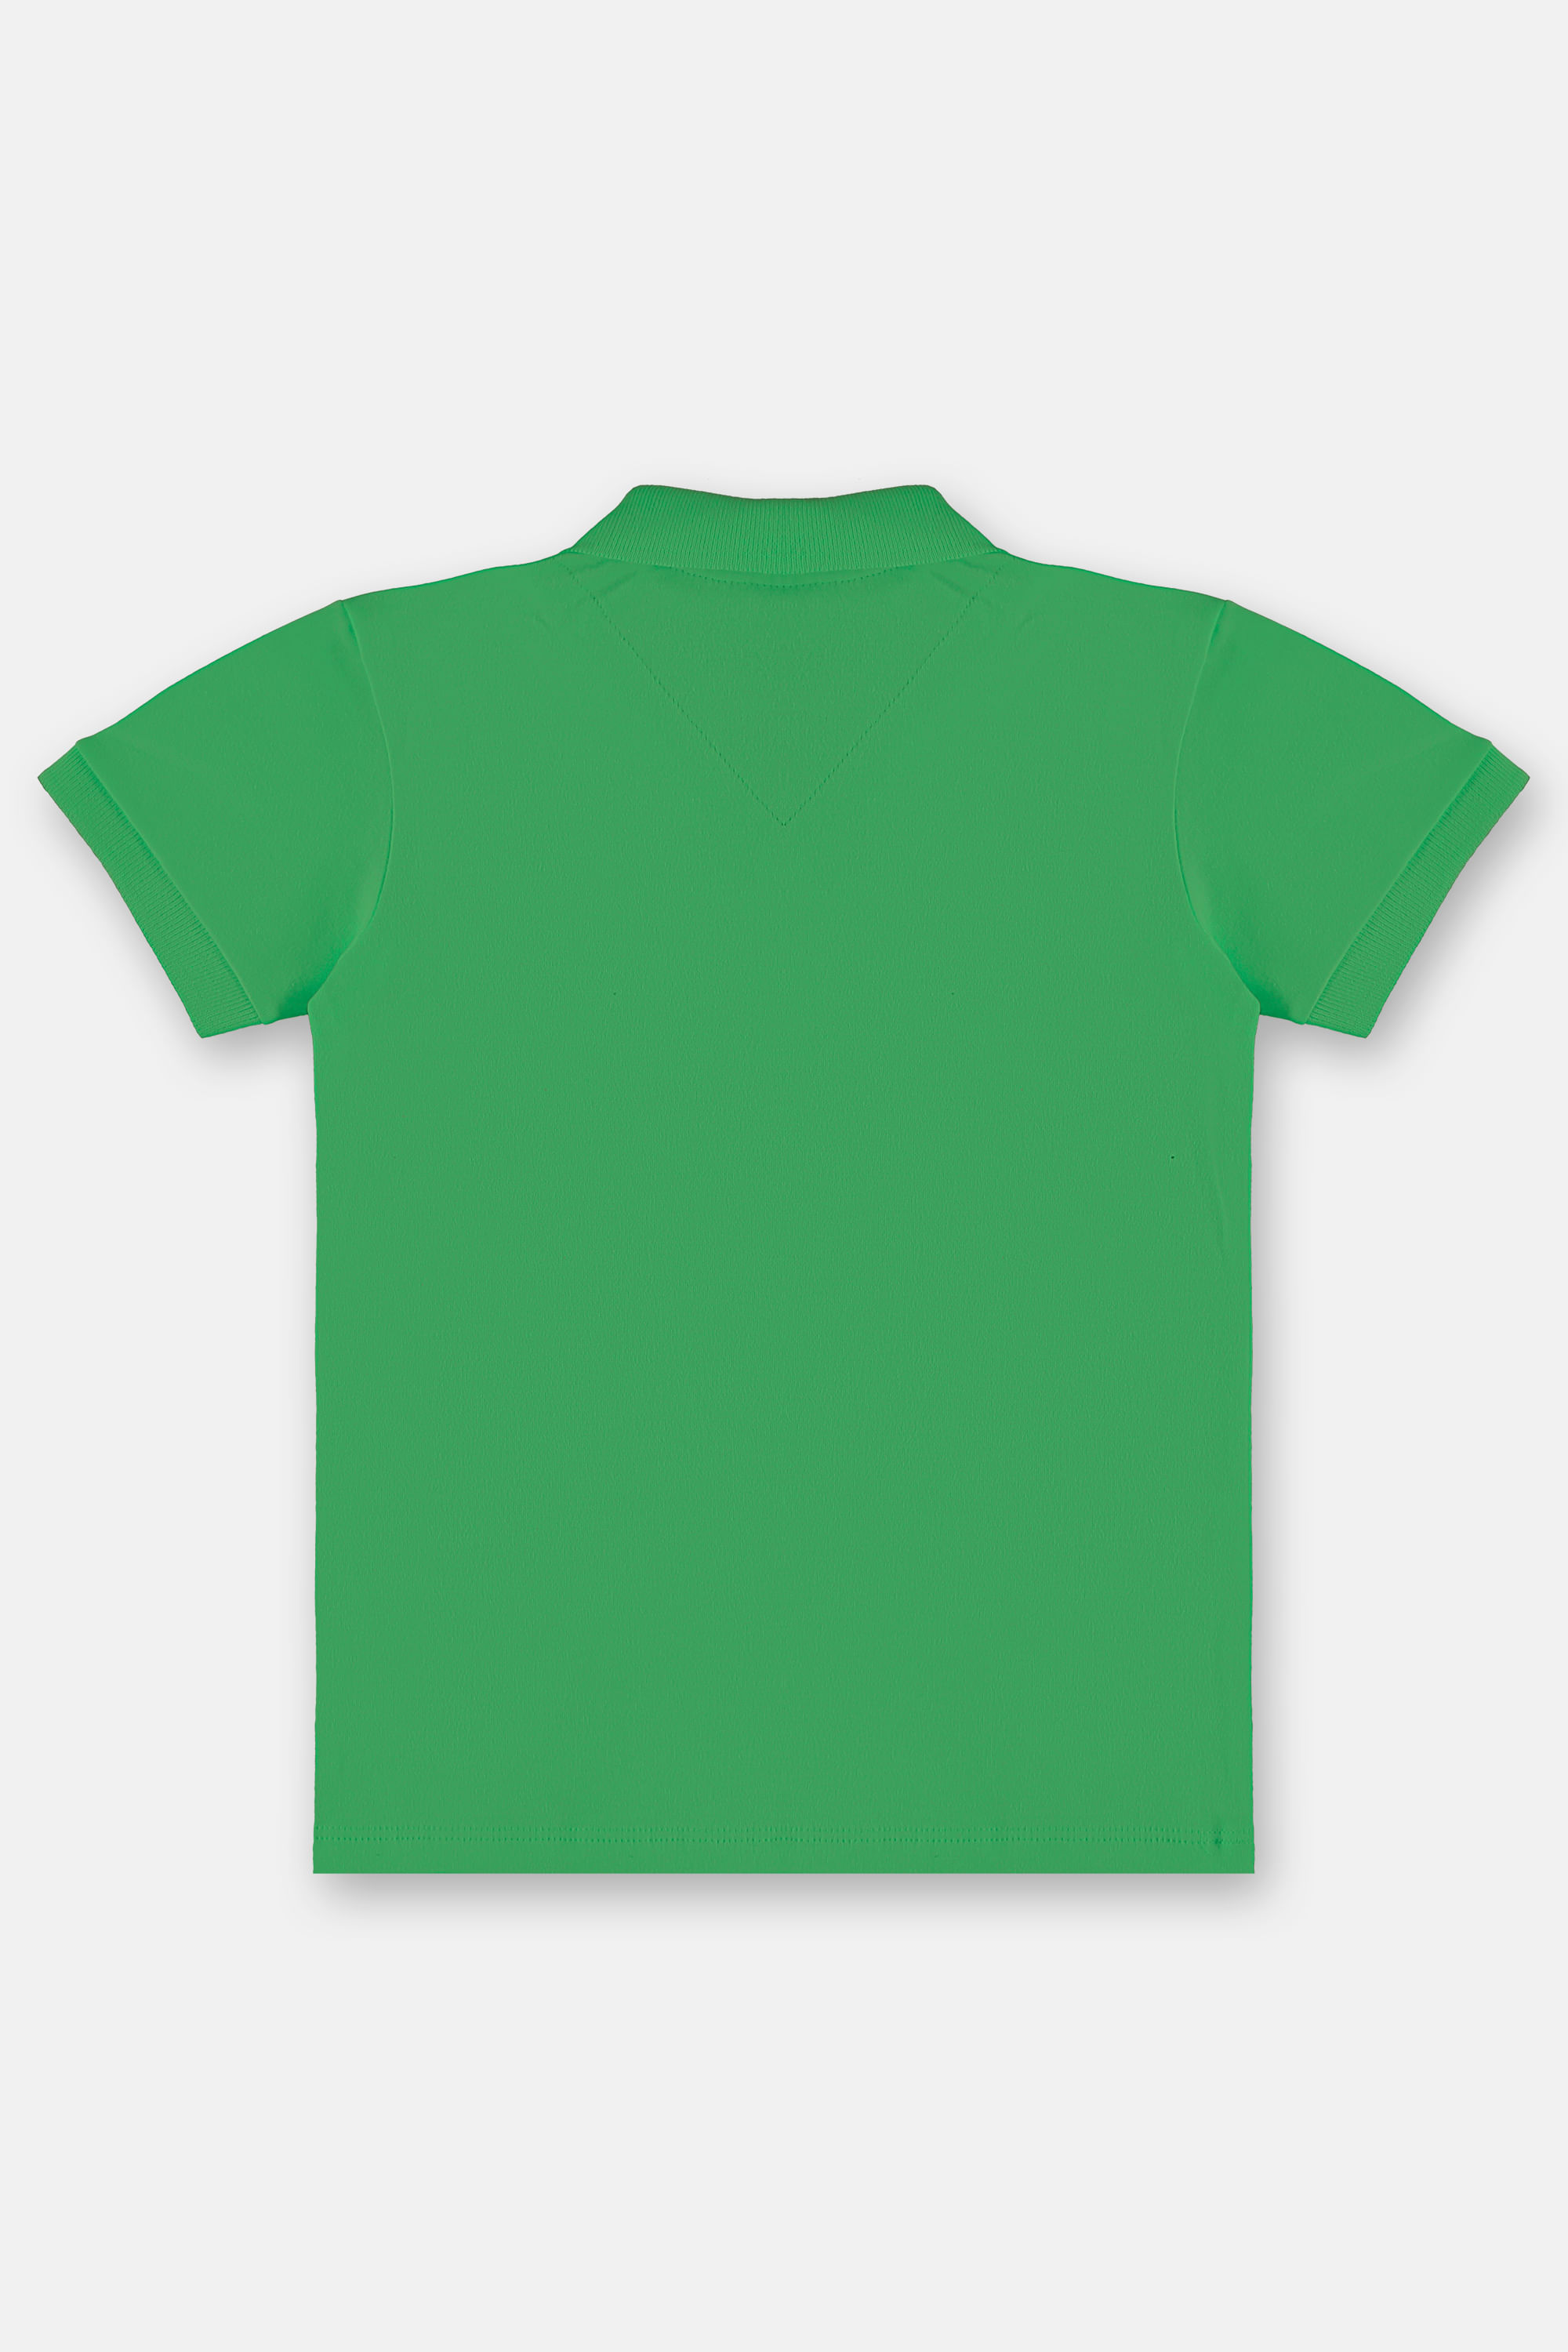 ZIPPY - Camiseta verde ZKBAP0303 23087 Niño